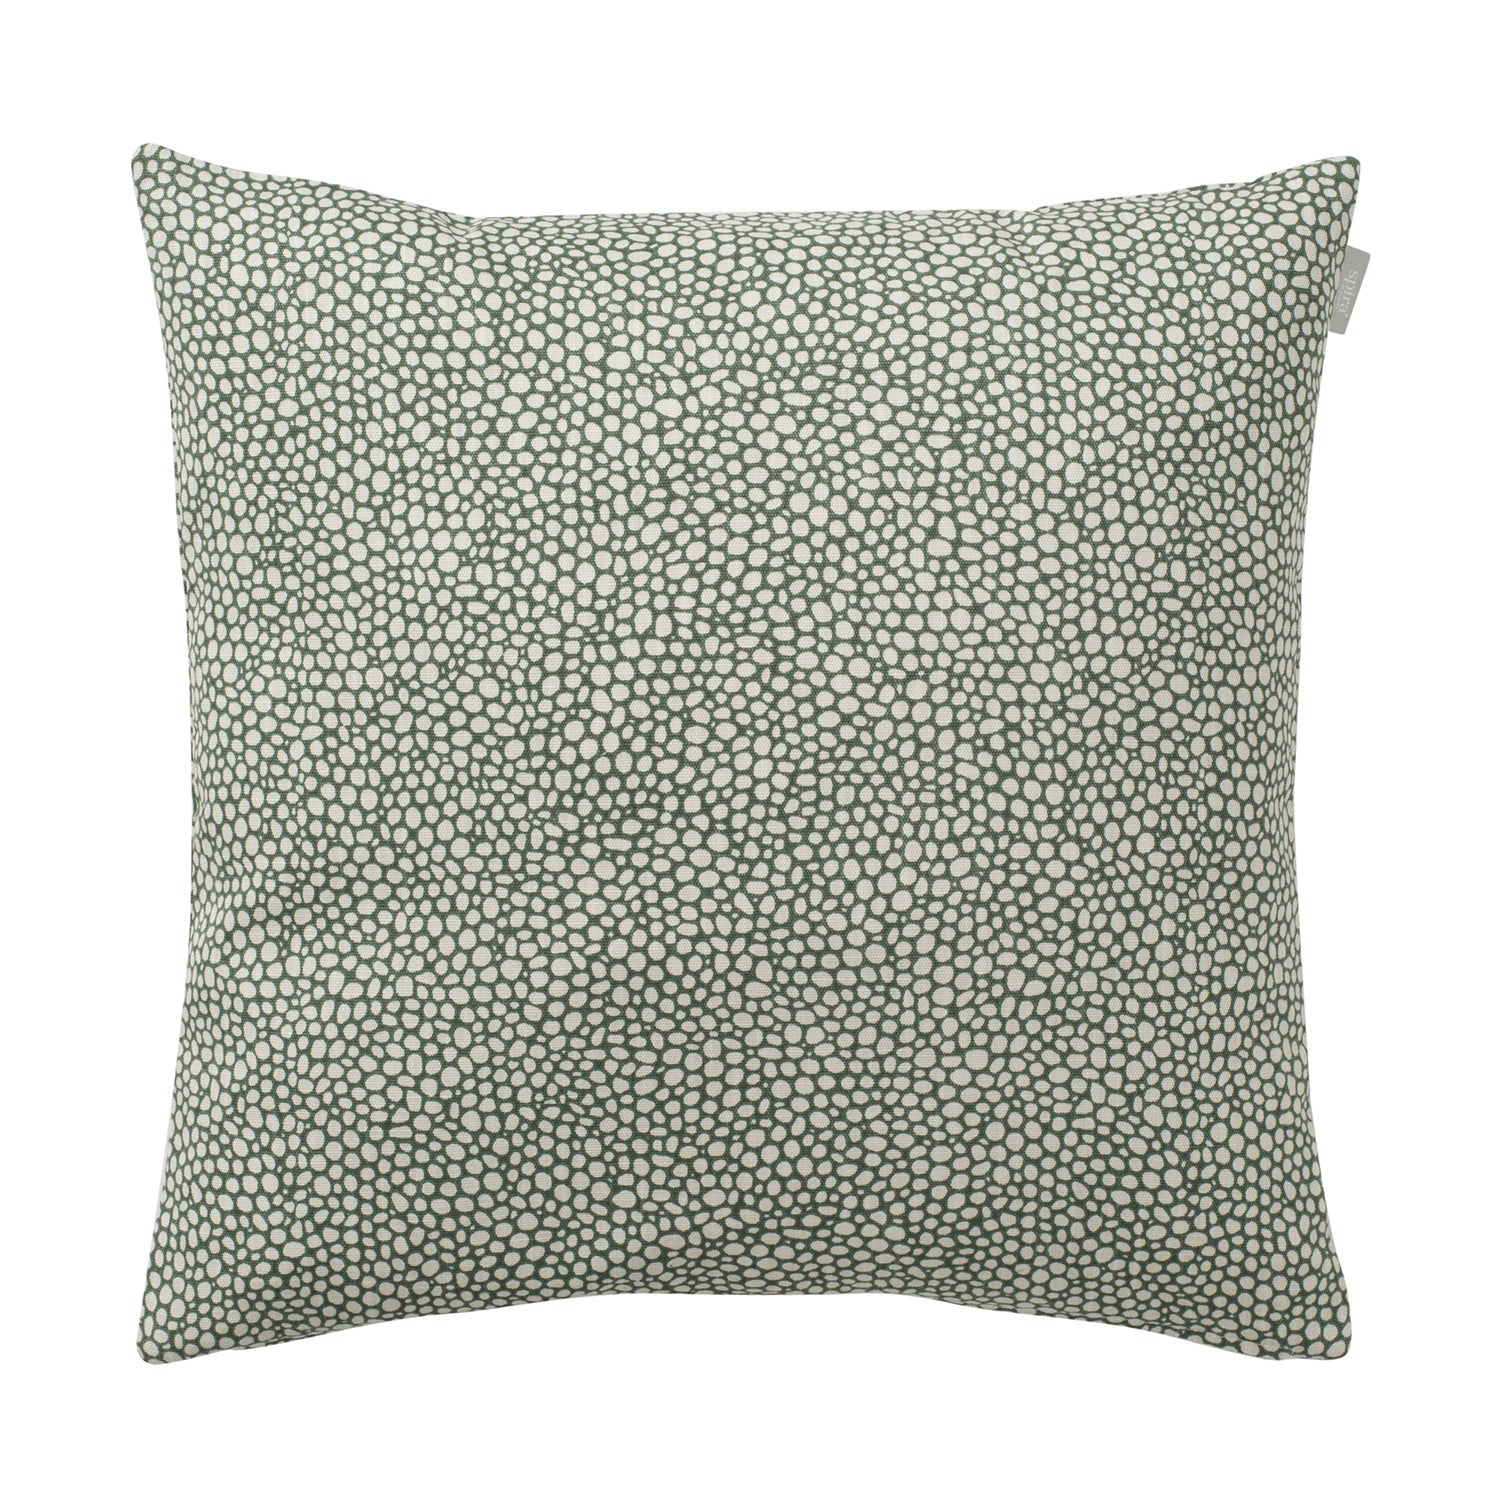 Spira Dotte Cushion Cover 50x50 cm, Moss Green